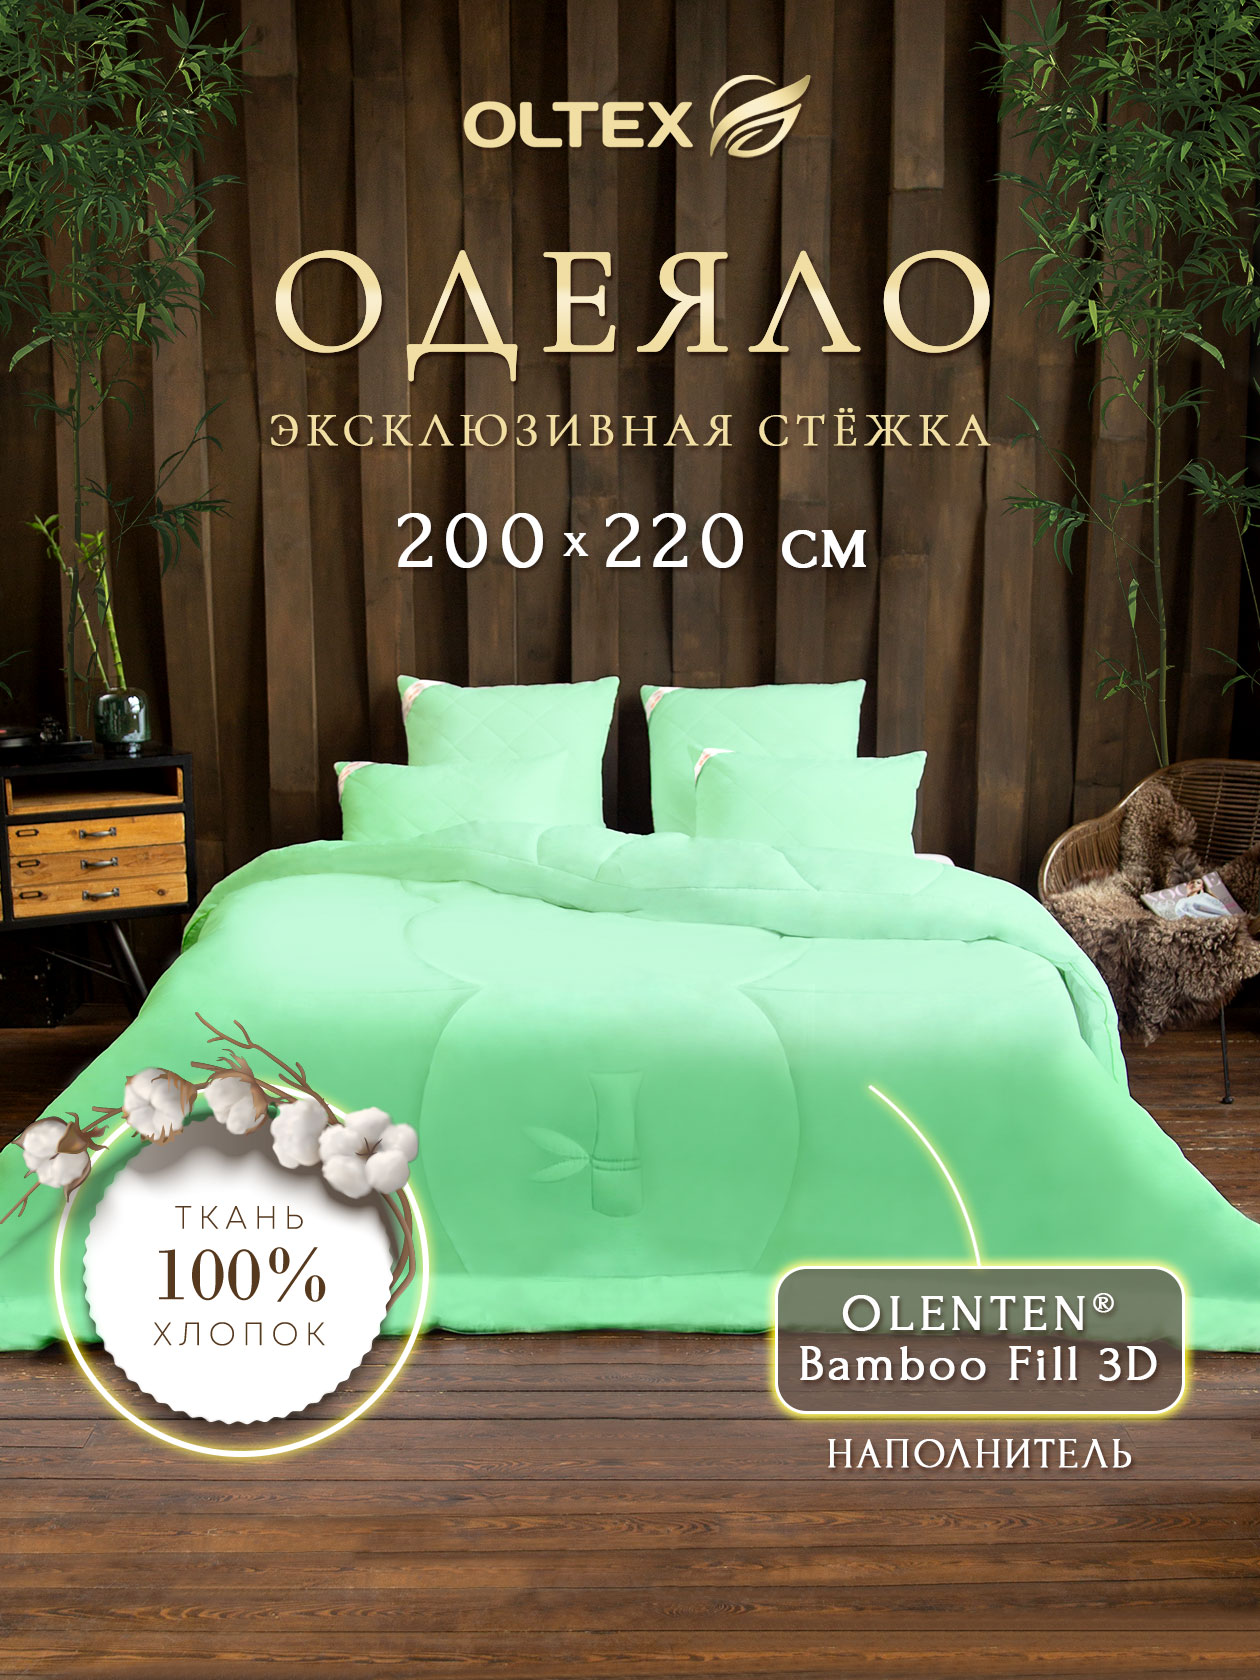 Одеяло Ol-tex Бамбук классическое 200х220 ОБТ-22-4 фисташковое